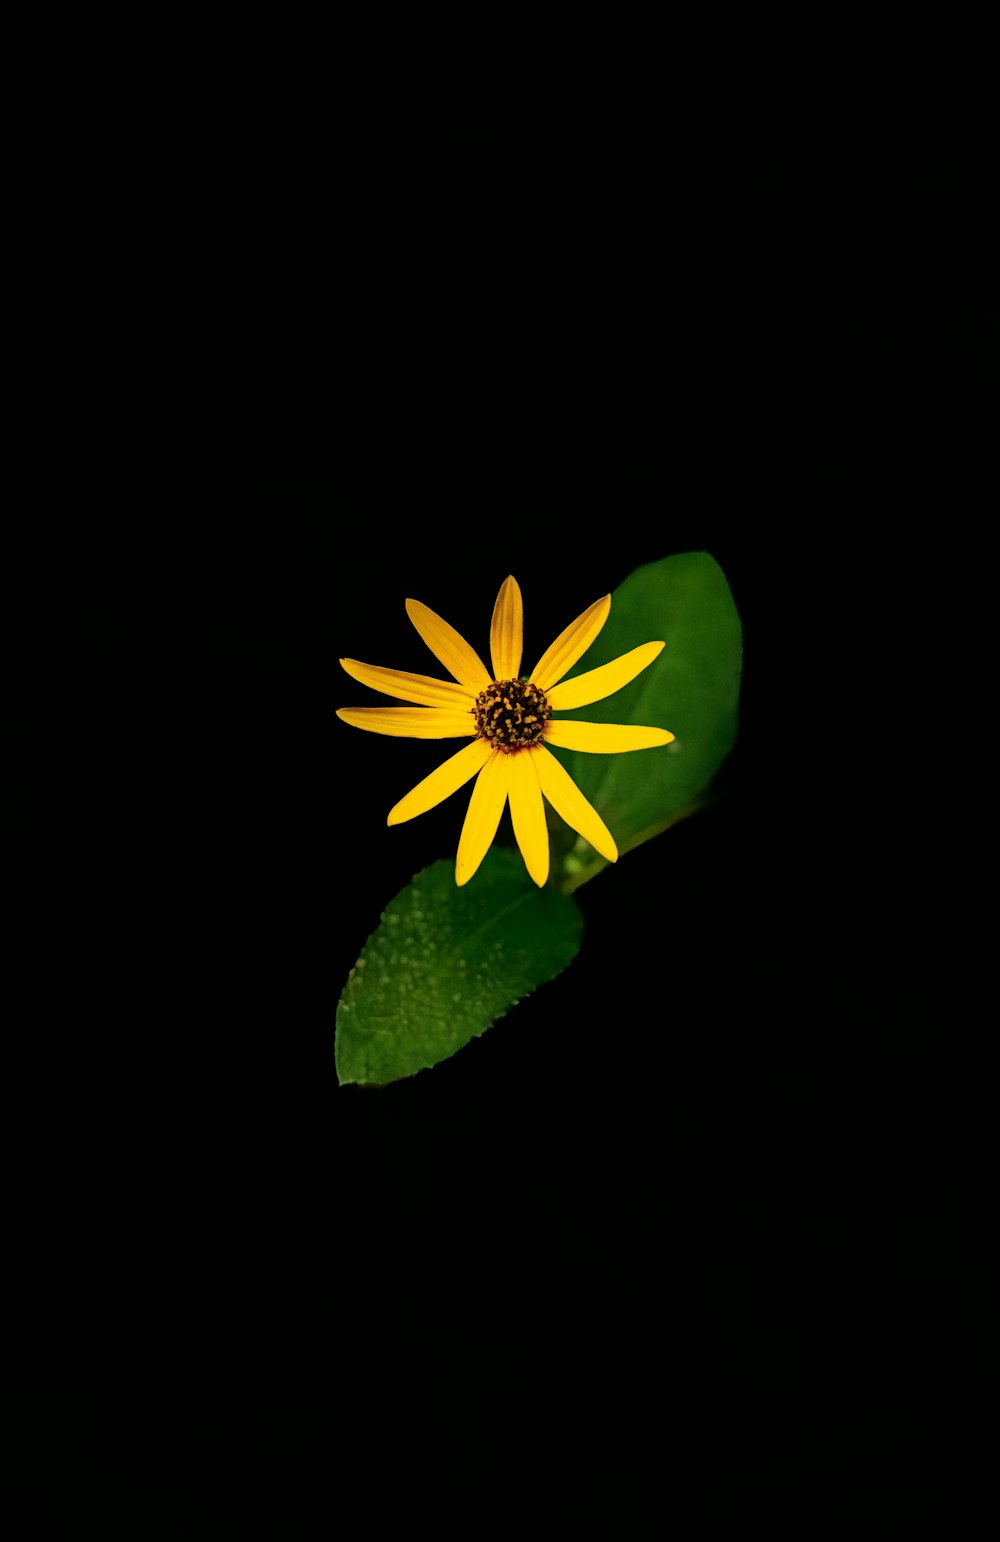 a single yellow flower on a green leaf